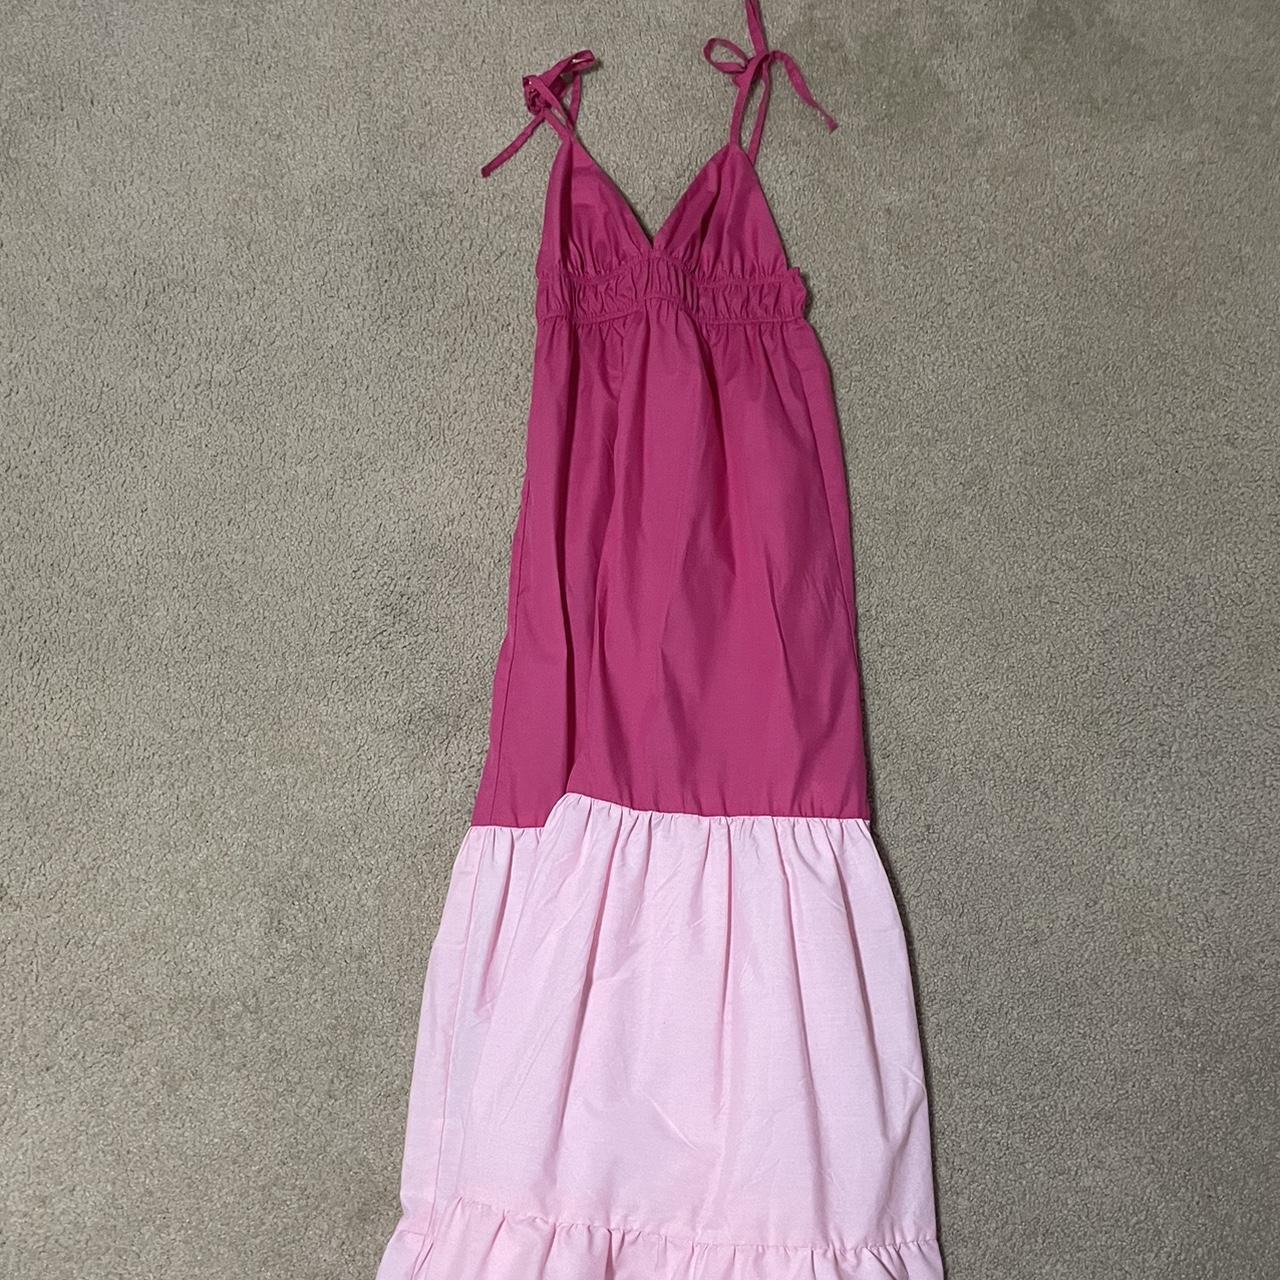 Bloomingdale's Women's Pink Dress | Depop